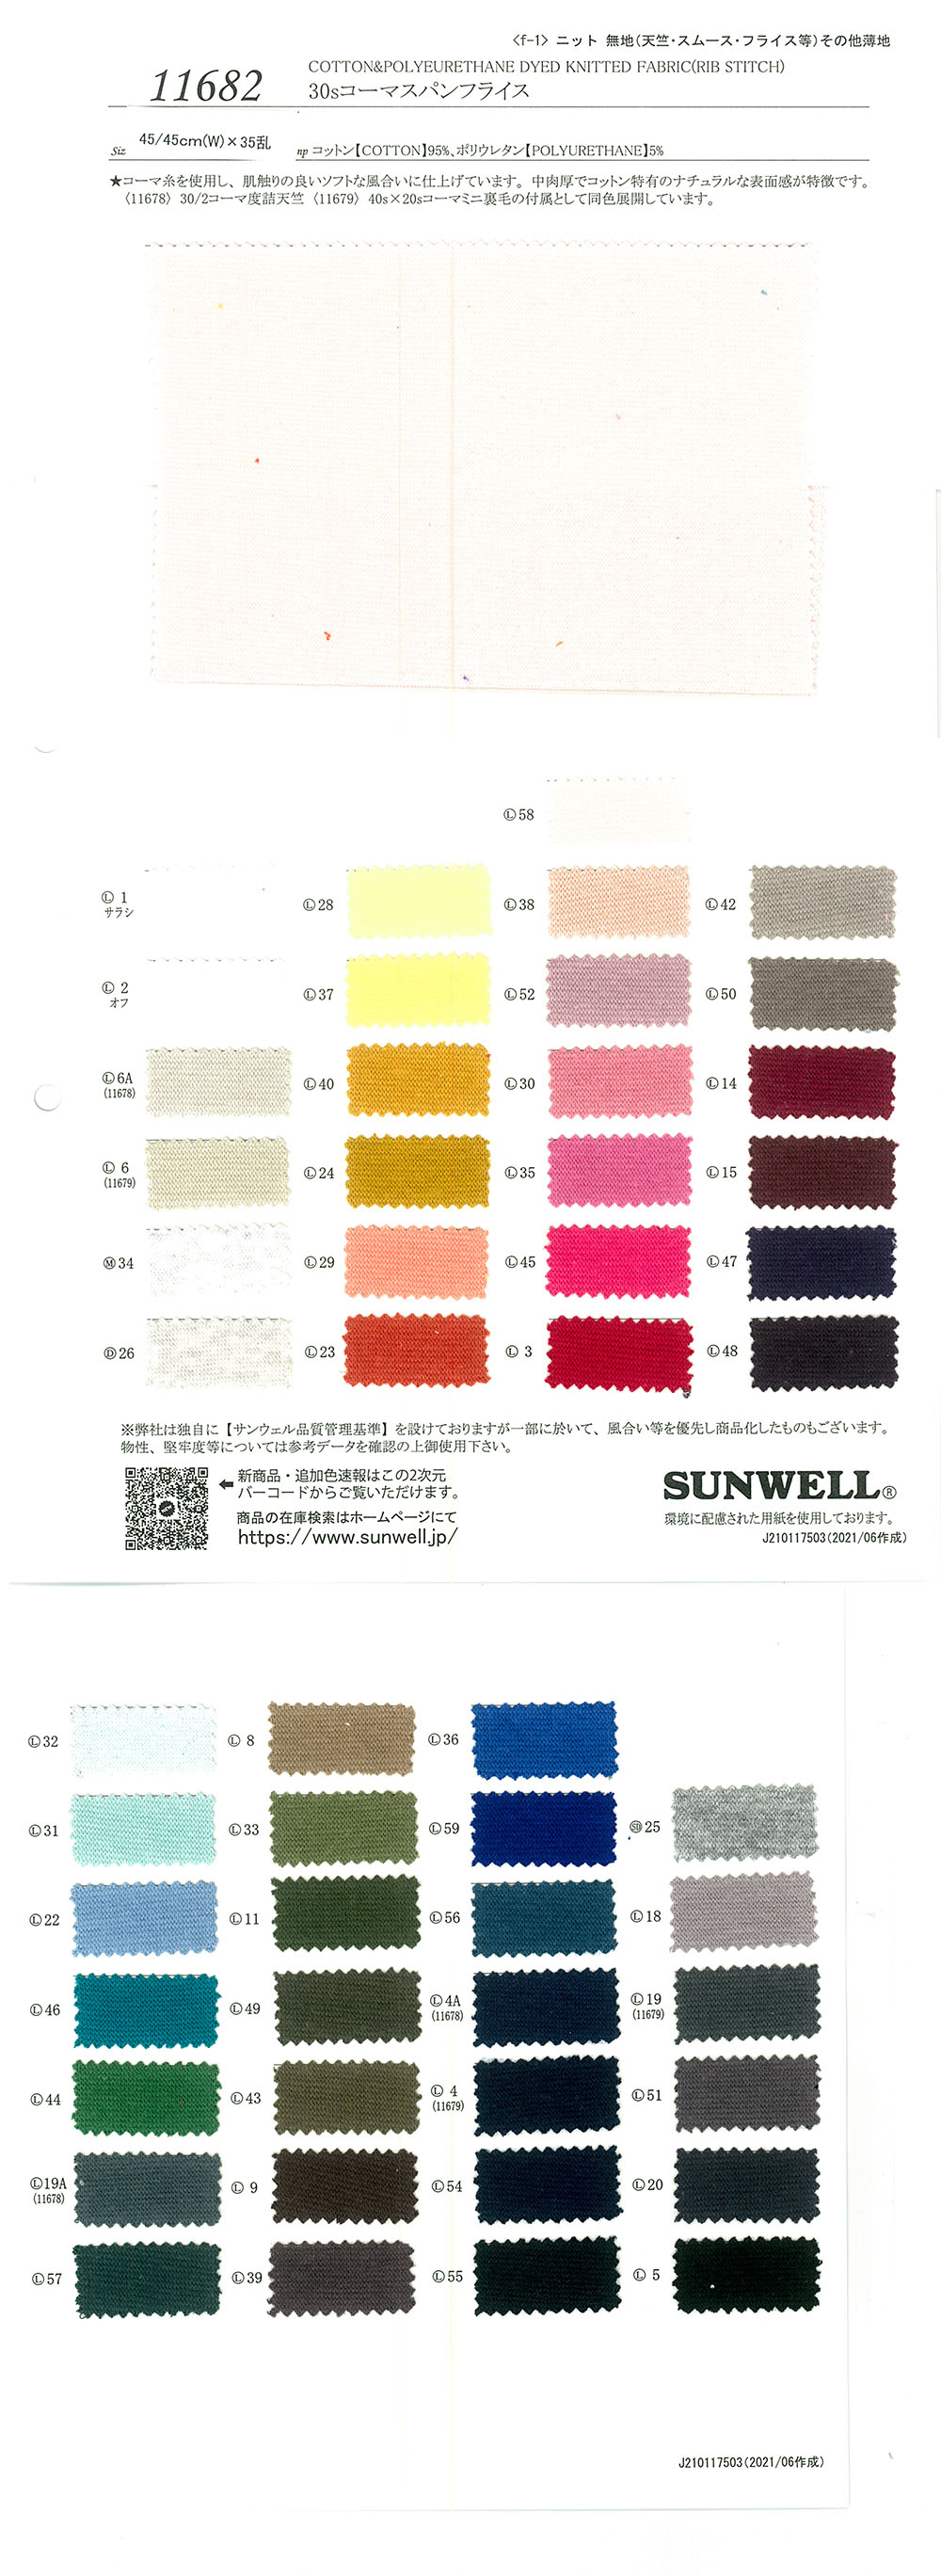 11682 30 Costela Circular Penteada De Rosca Simples 30[Têxtil / Tecido] SUNWELL